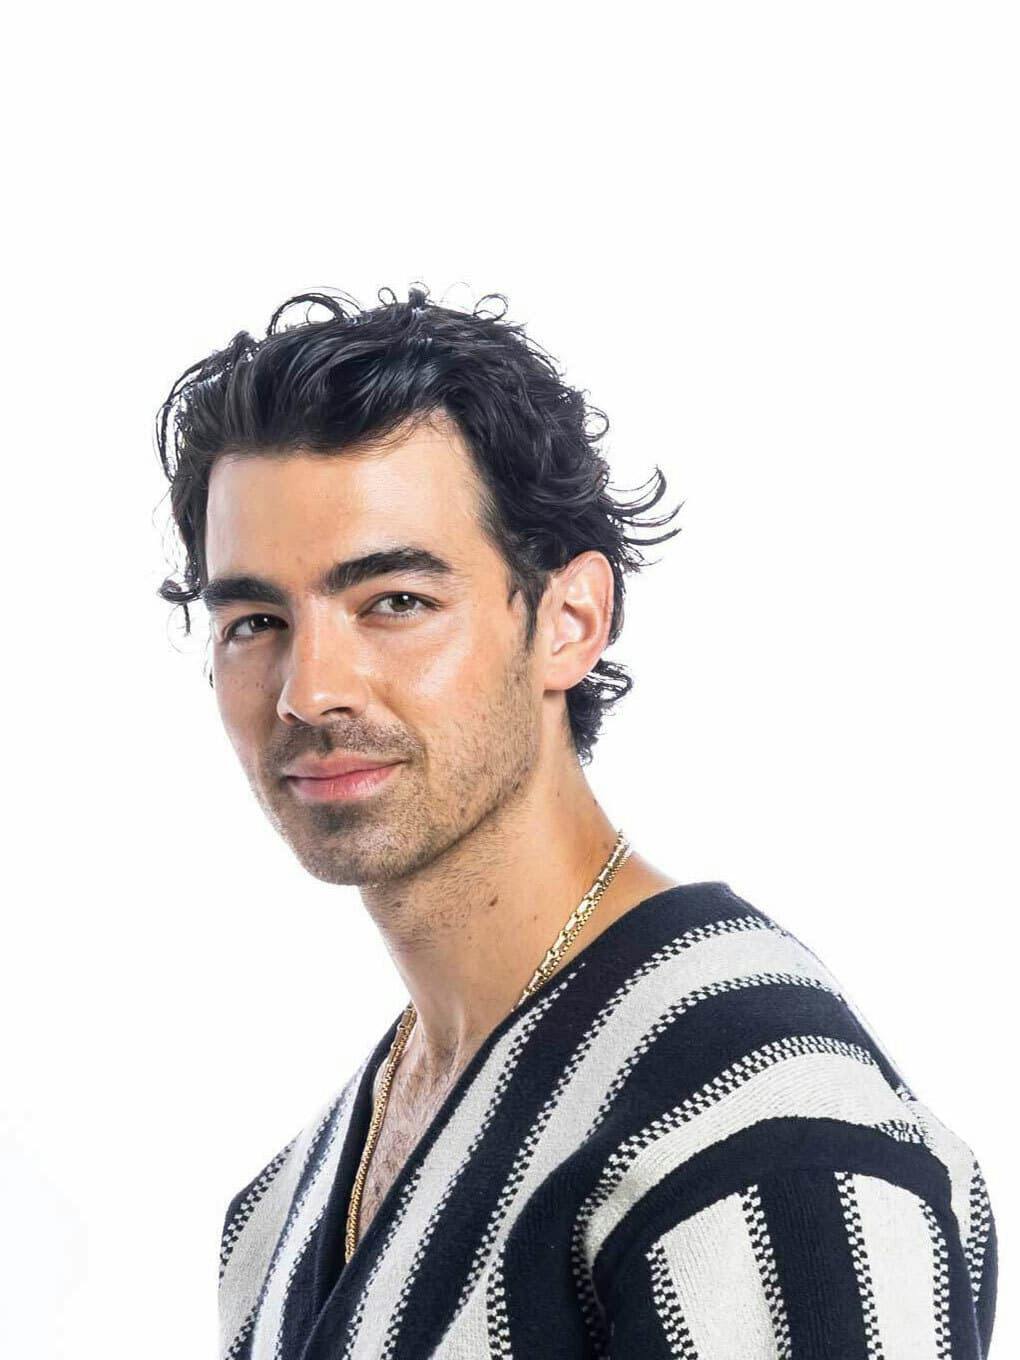 Joe Jonas upgraded his vision with EVO Visian ICL!